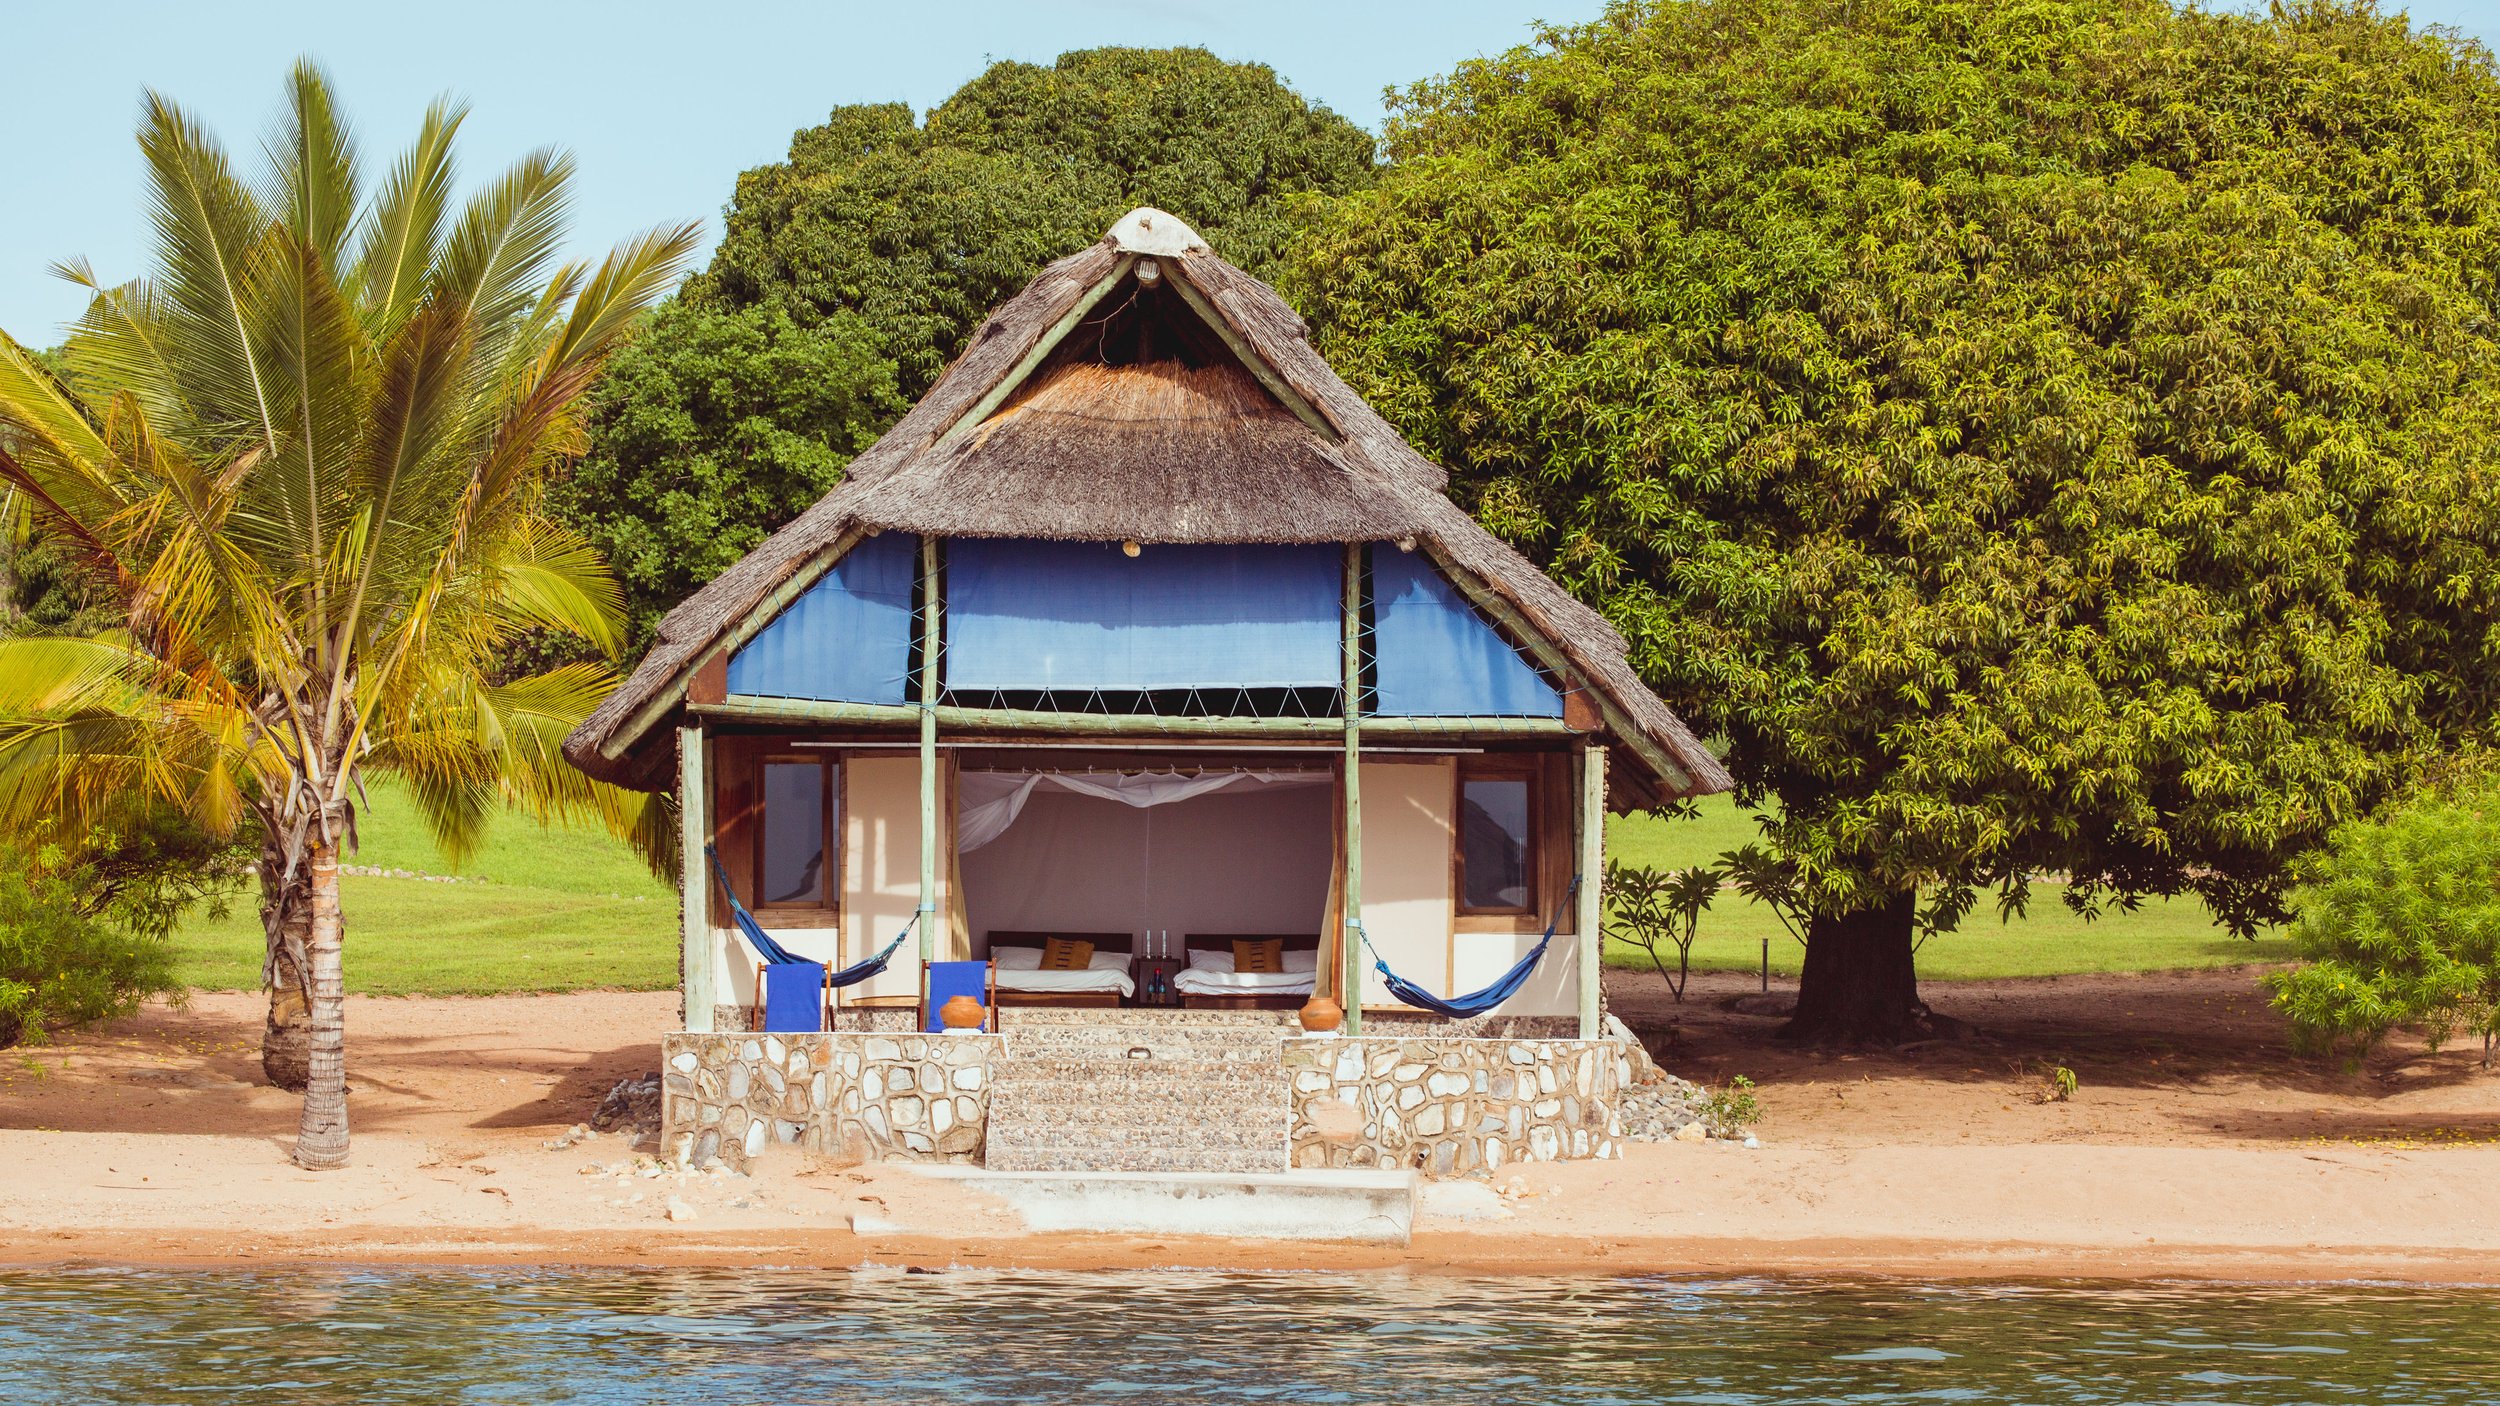 Lake Shore Lodge Lake Tanganyika - Tanzania - Chalet.jpg